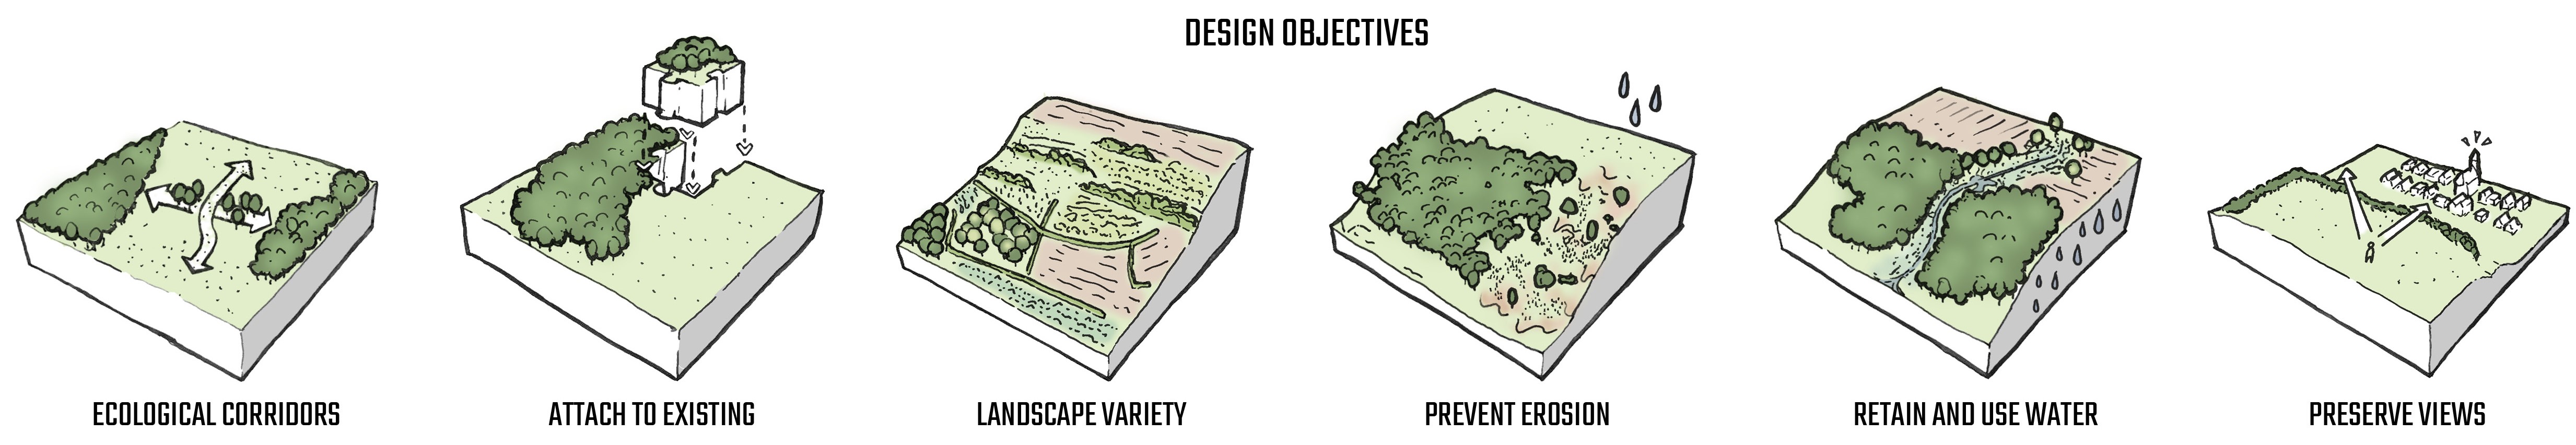 Design objectives